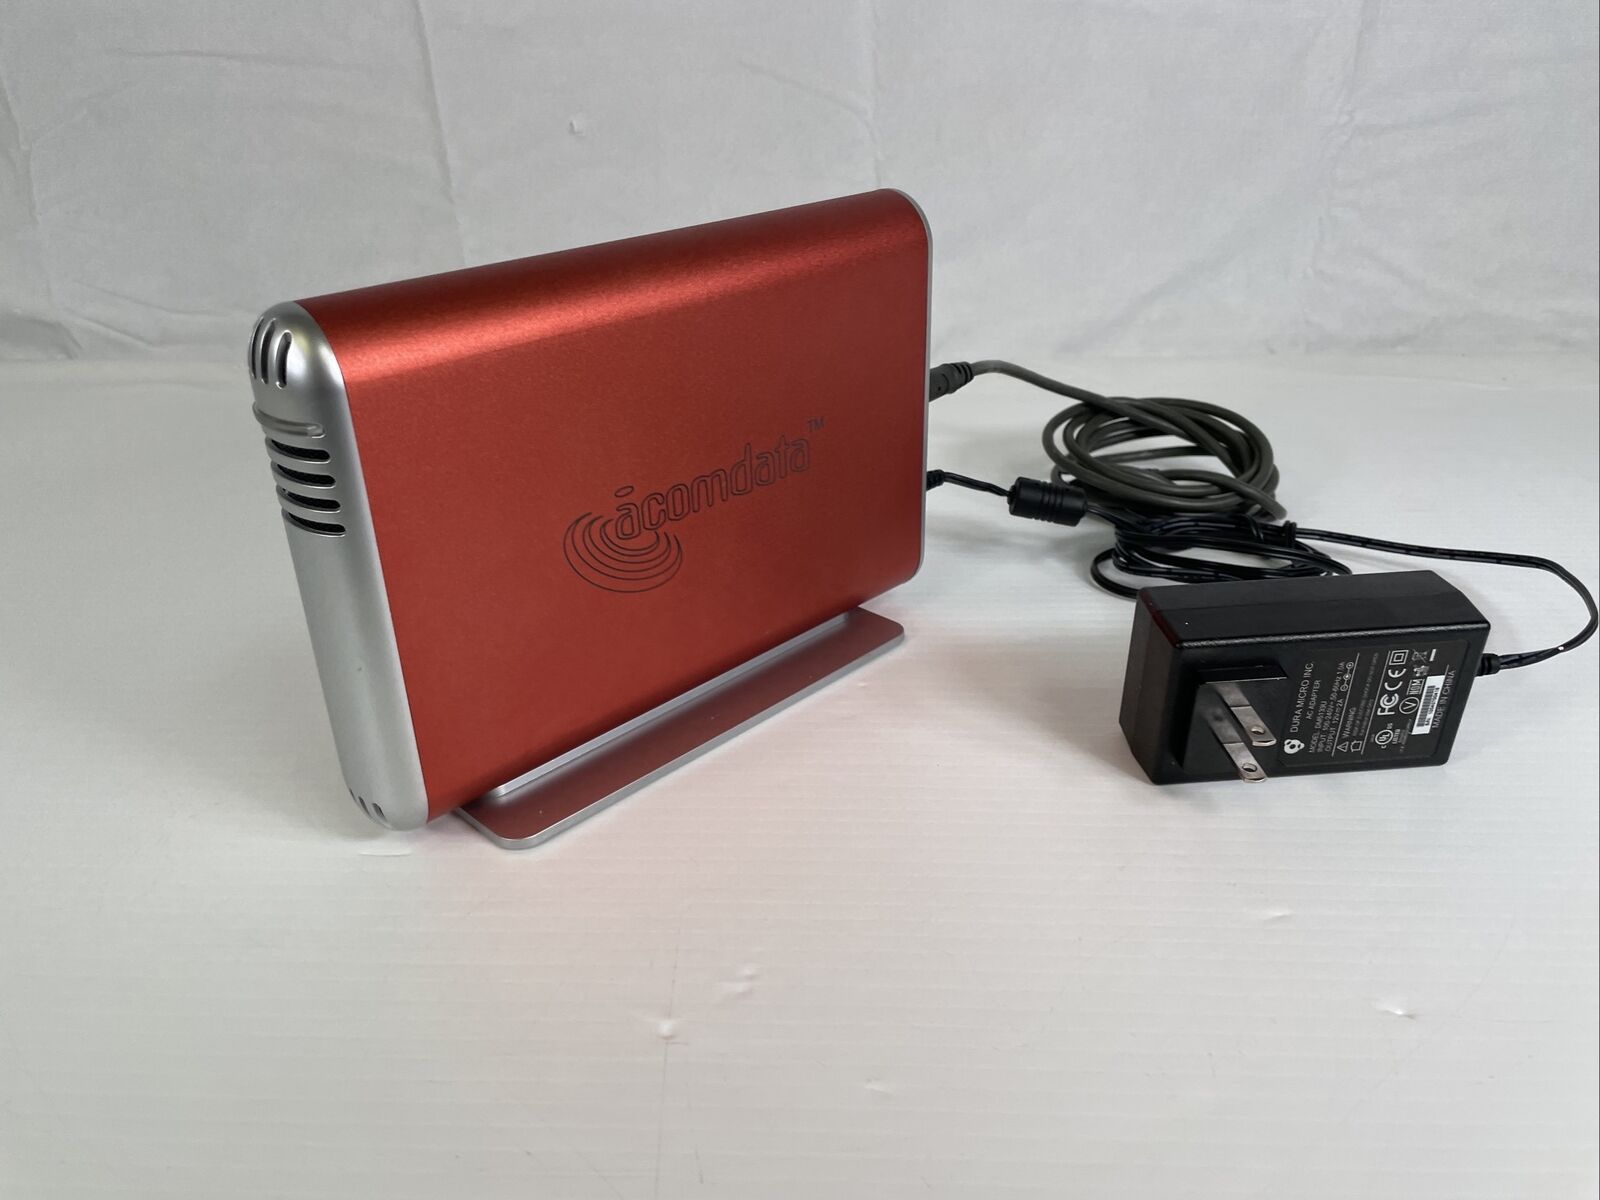 Vintage Acomdata Hard Drive Enclosure USB 2.0 20GB HDD - Wiped